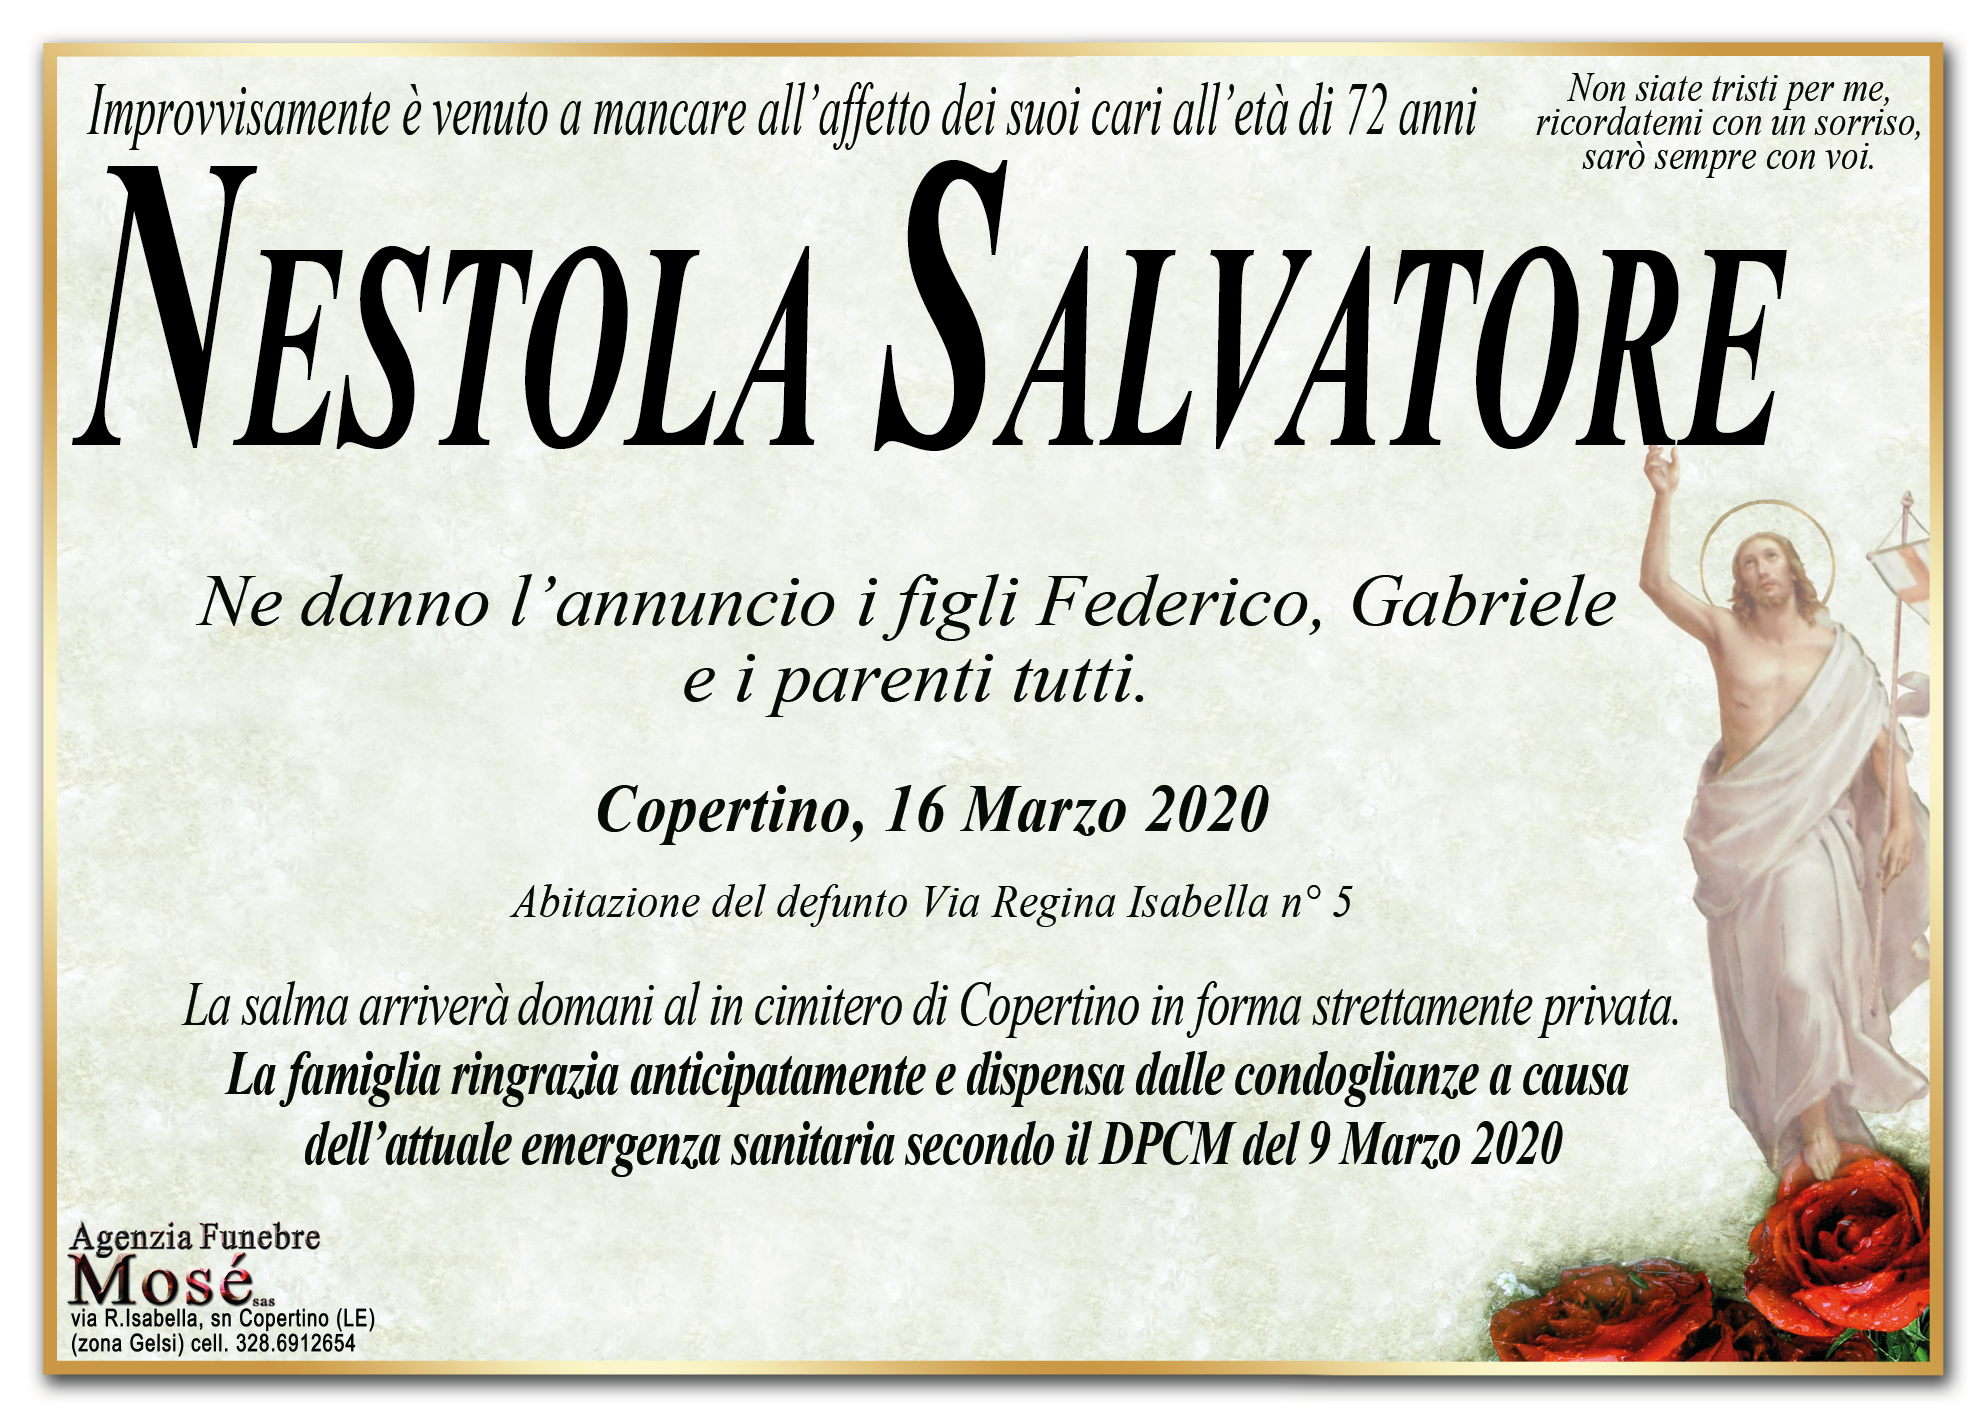 Salvatore Nestola